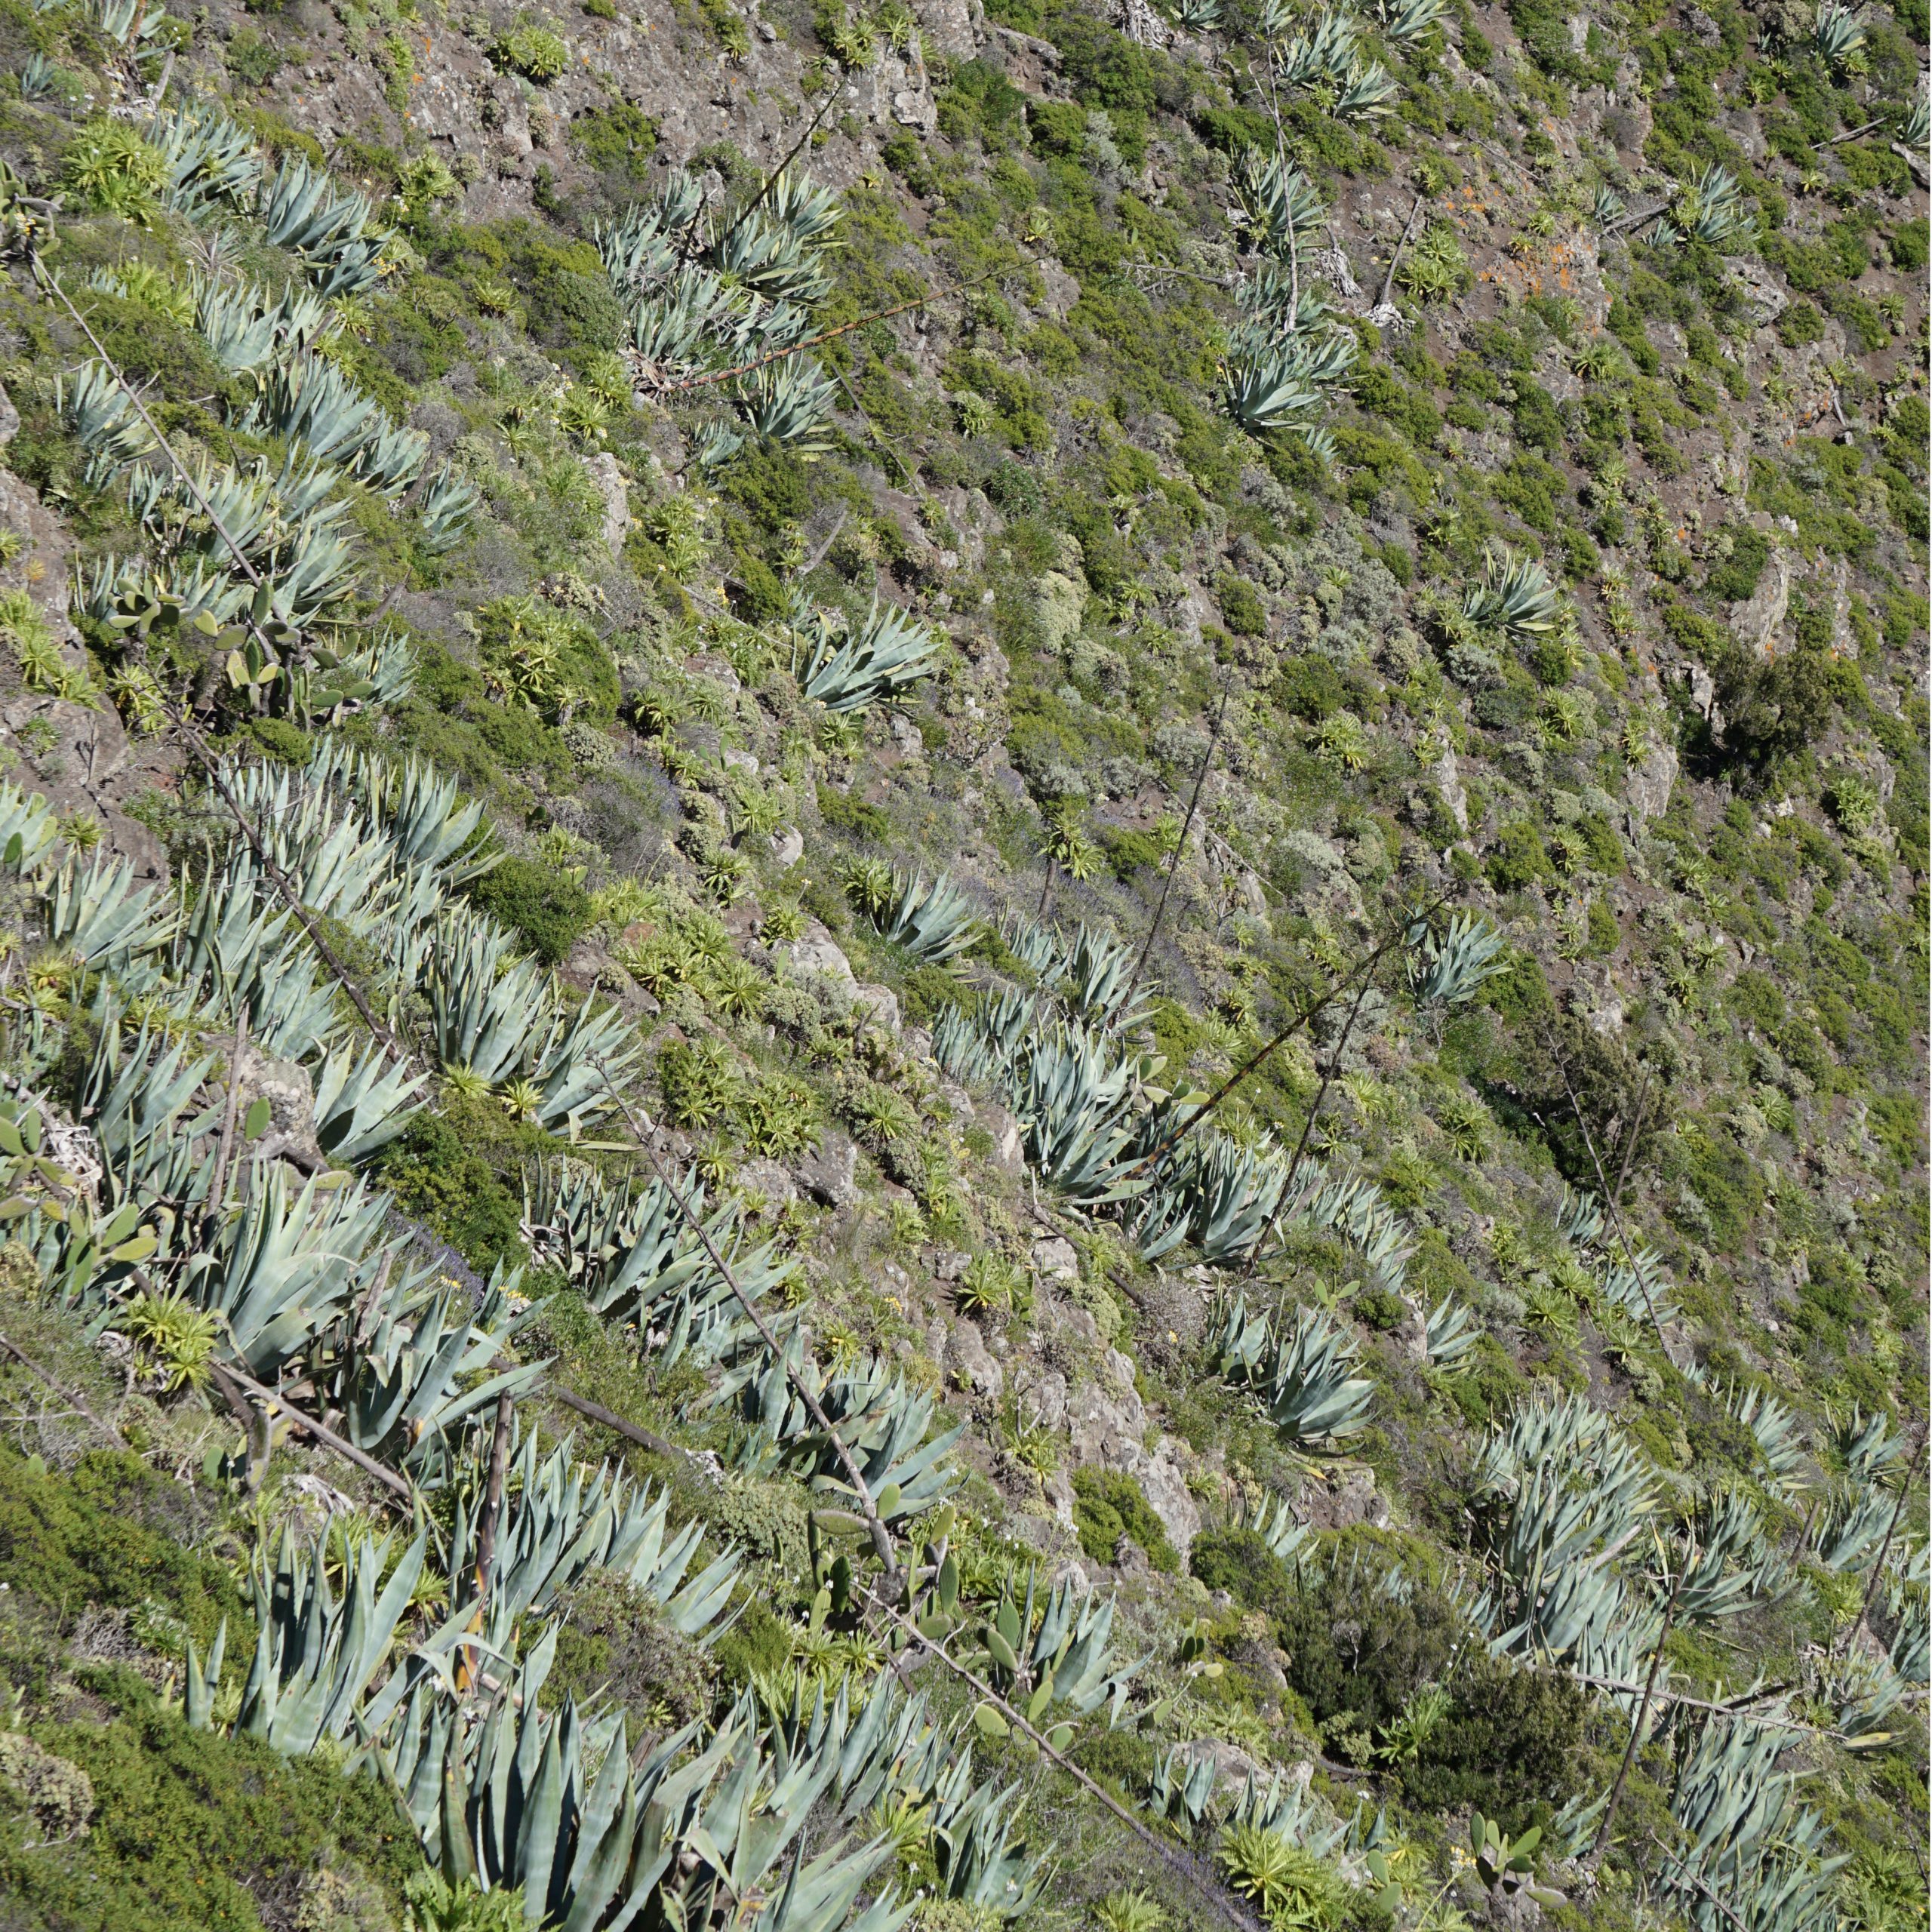 Kakteenhang im Teno Gebirge, Teneriffa Foto: Gabriele Riedel